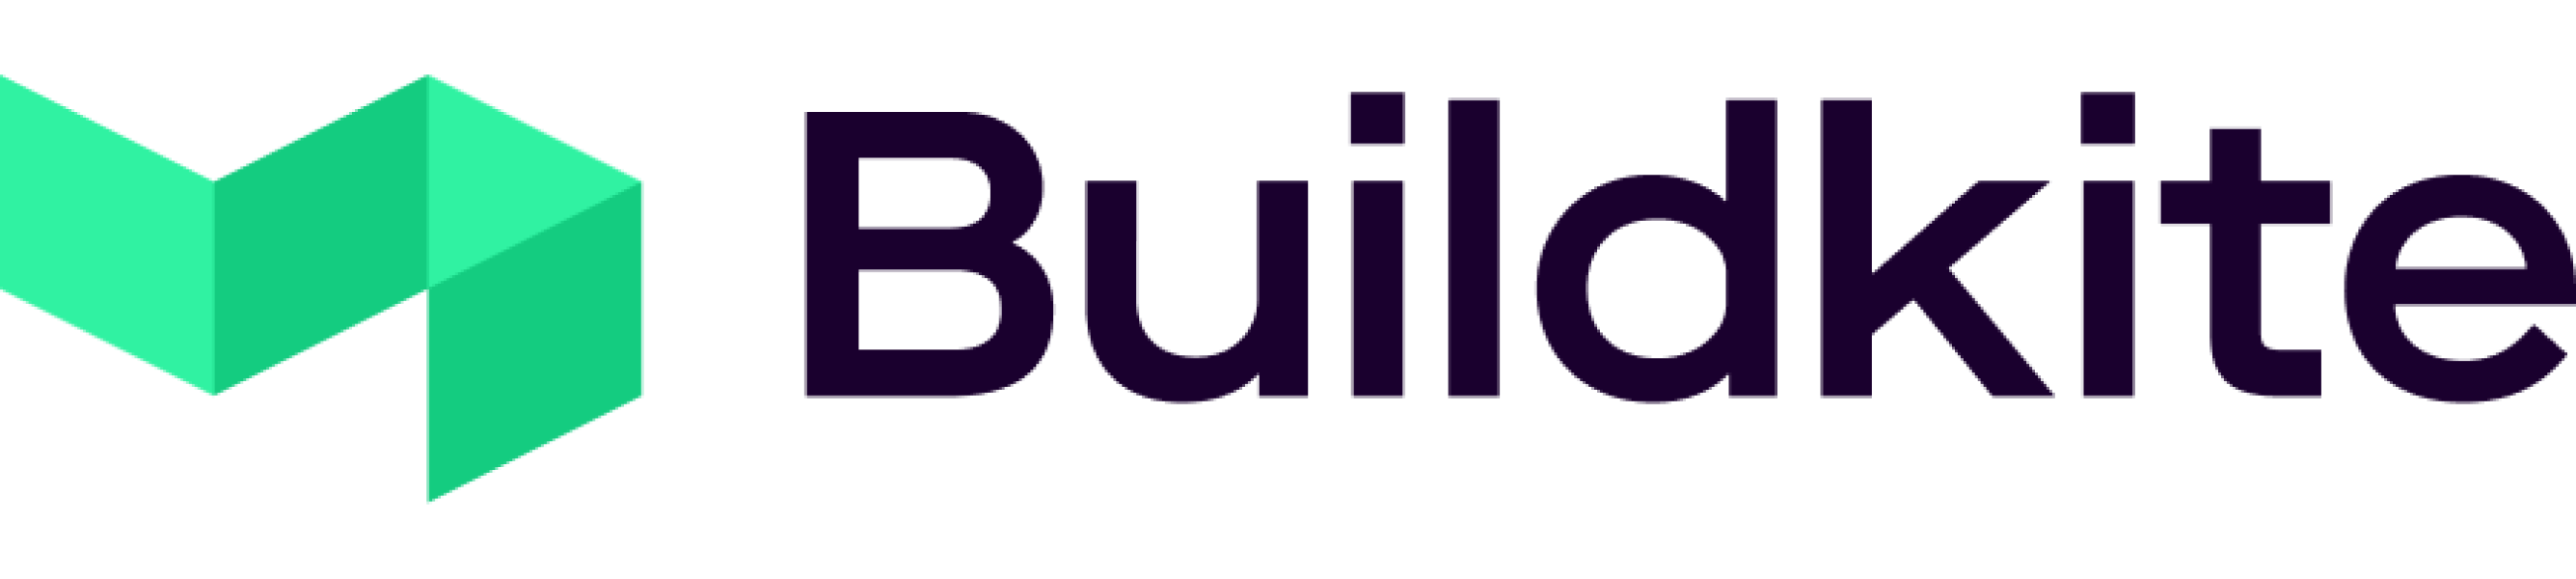 Buildkite Conference Sponsor